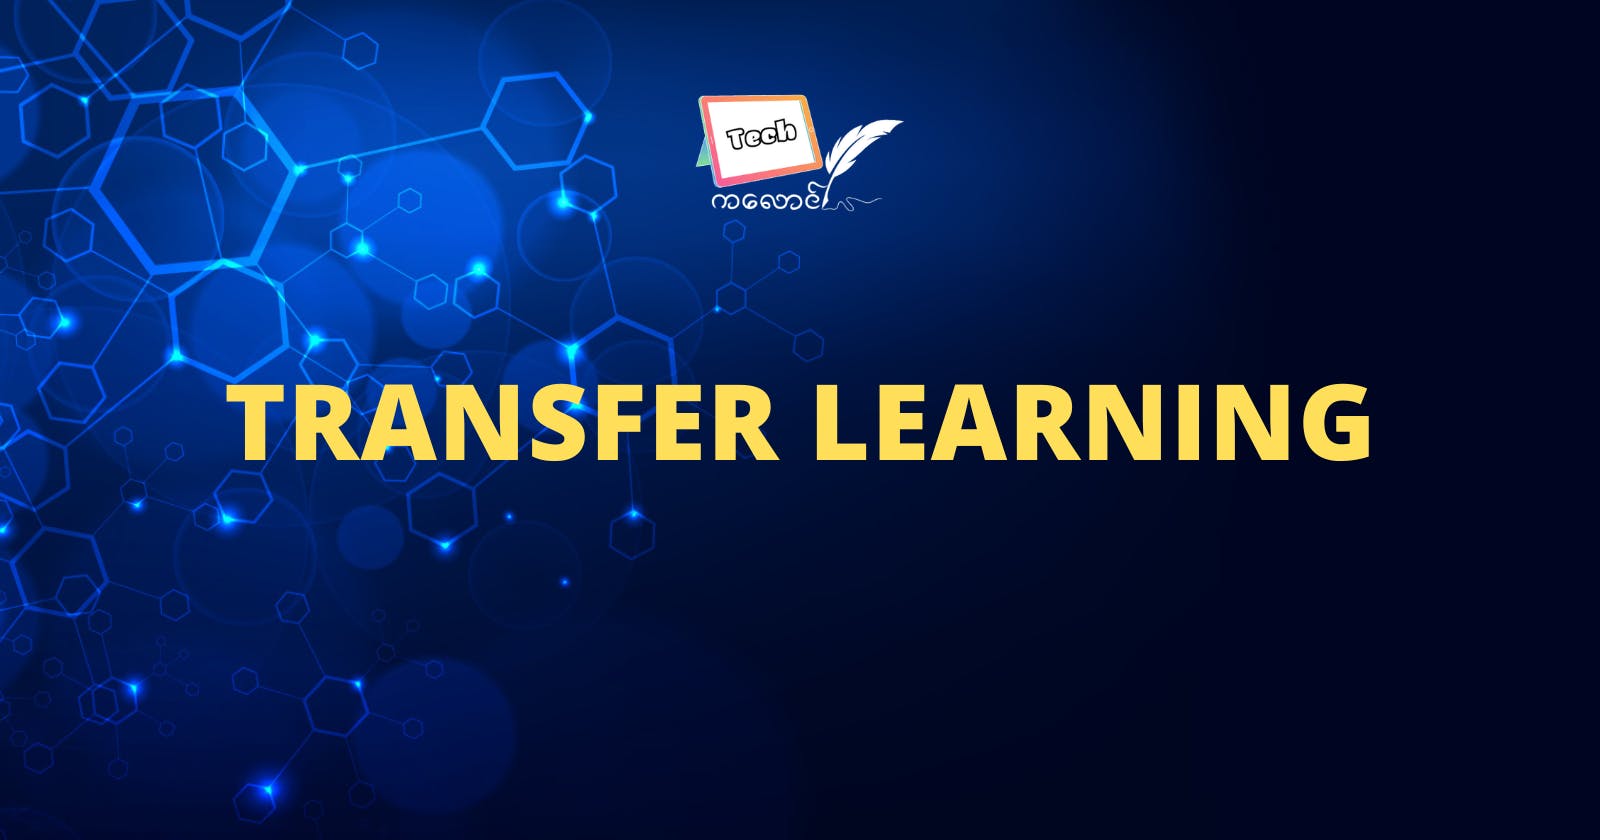 Transfer learning